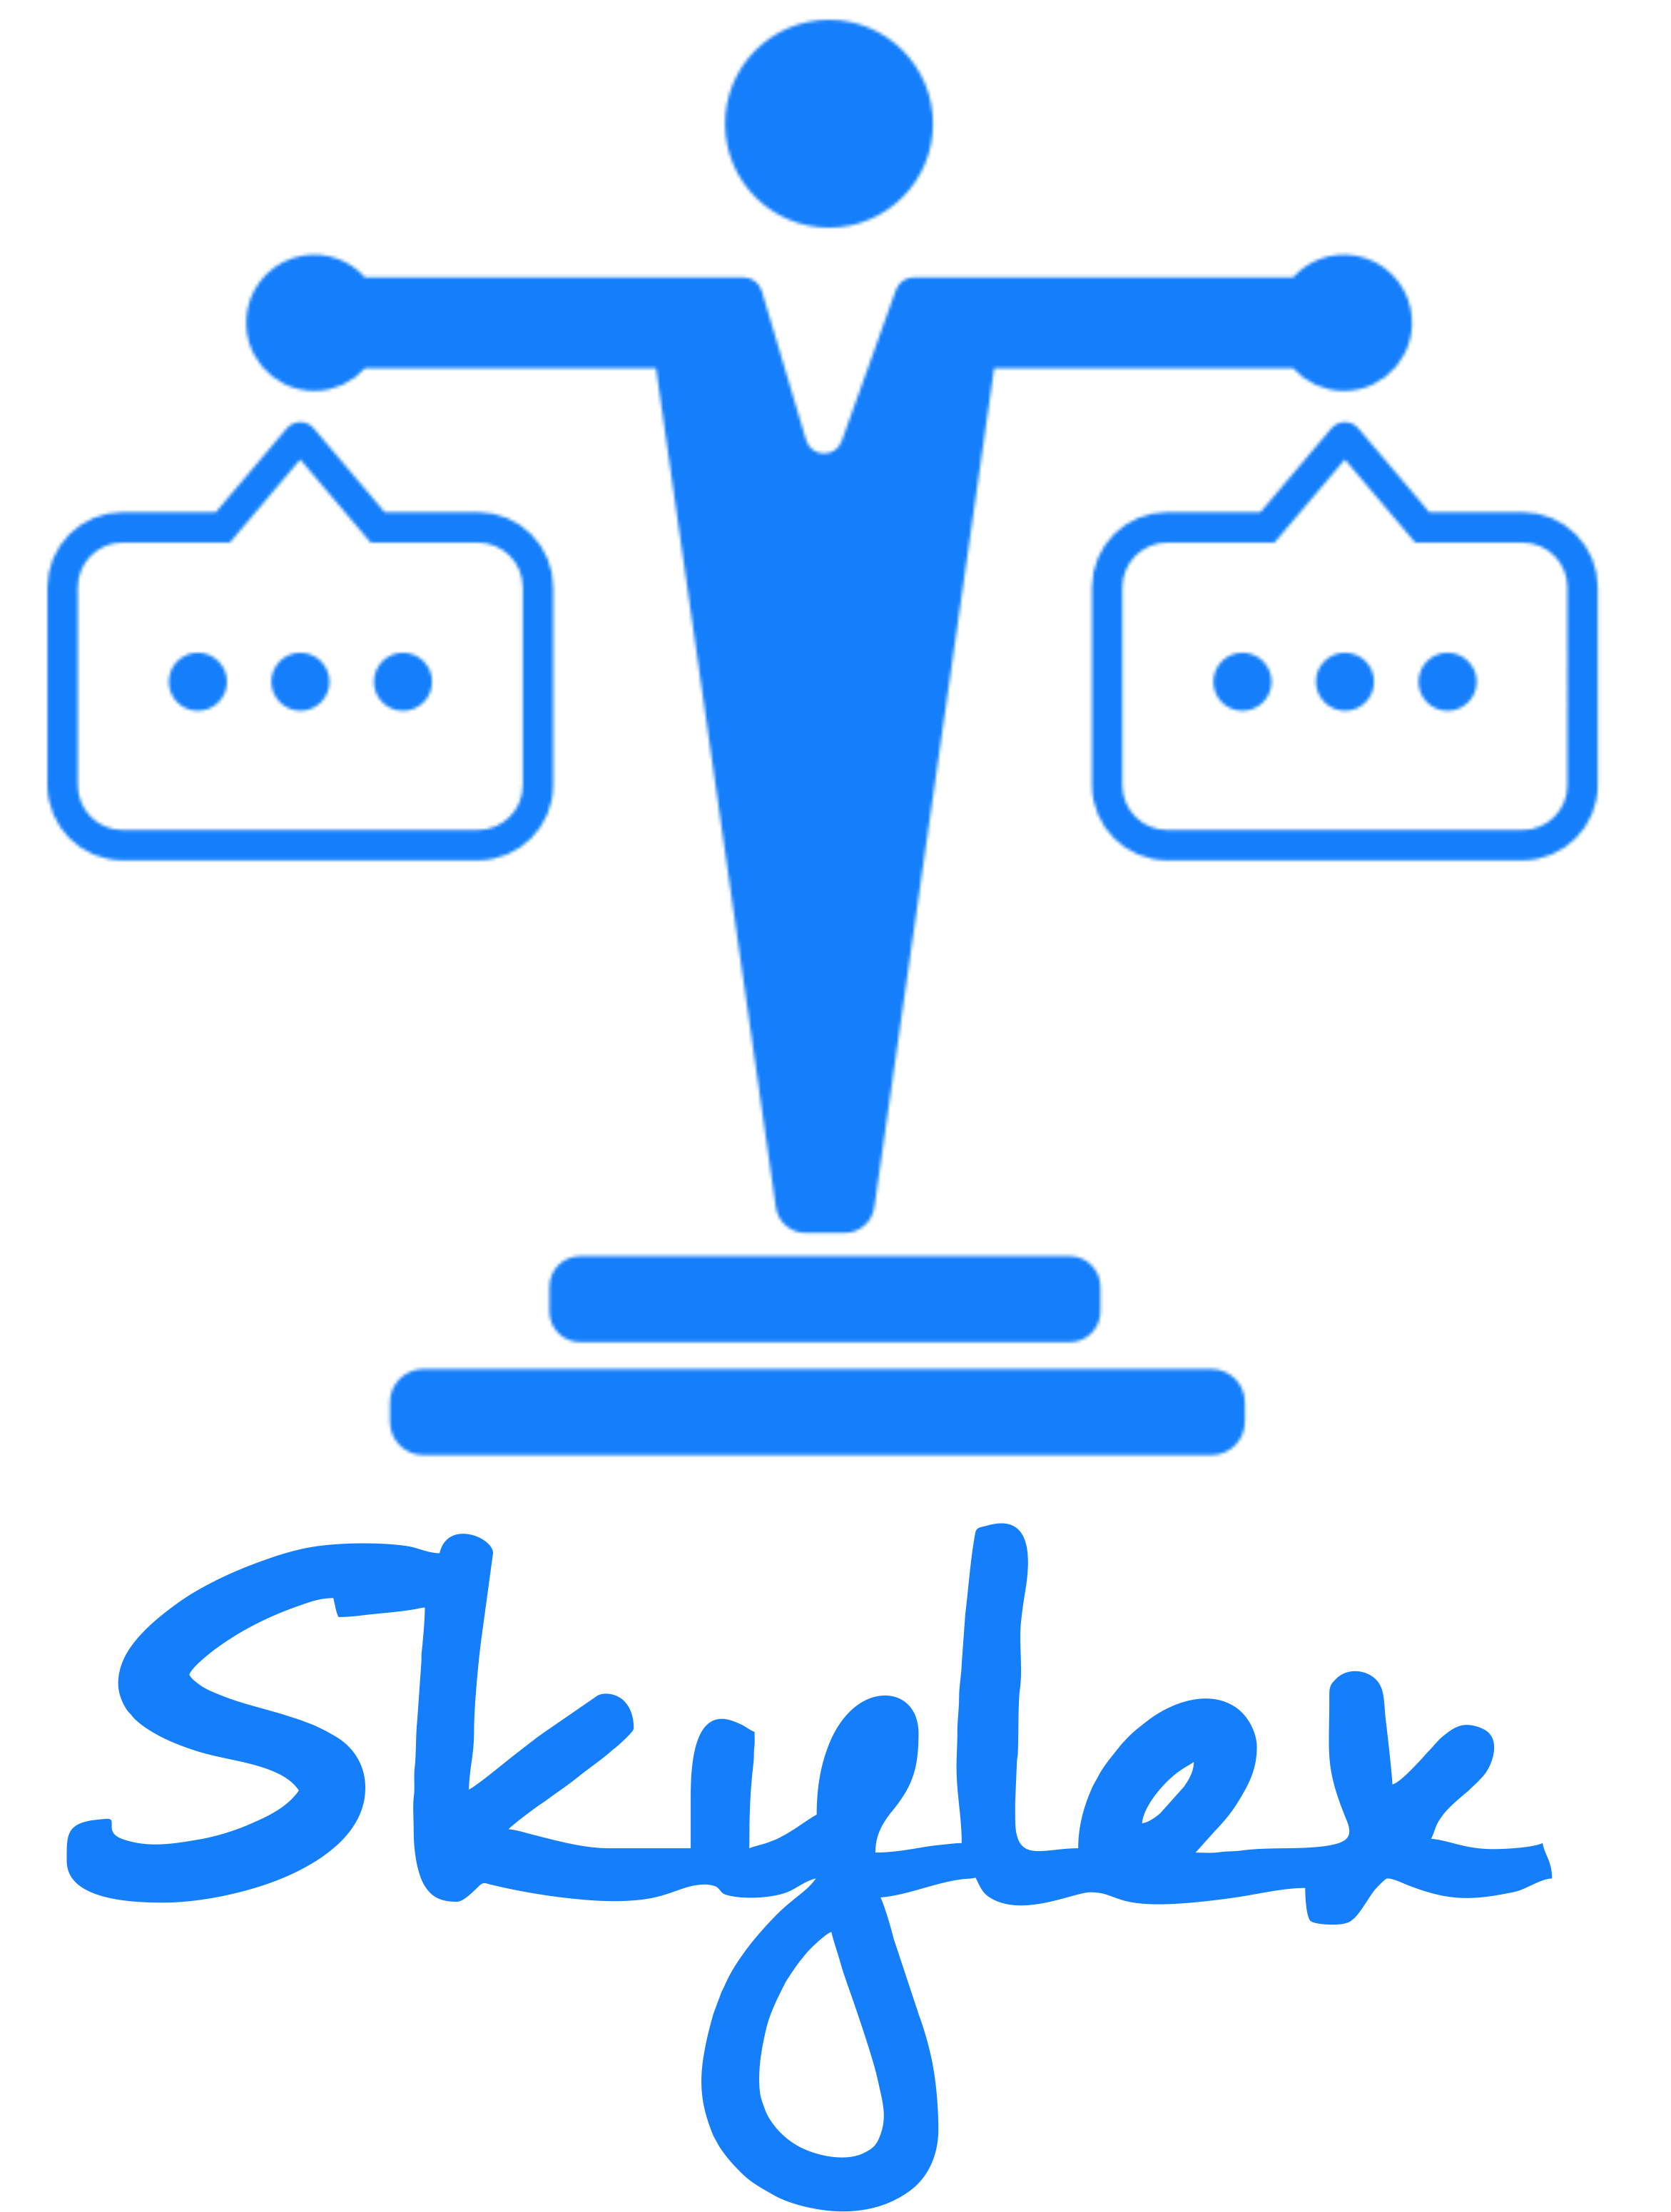 About Skylex